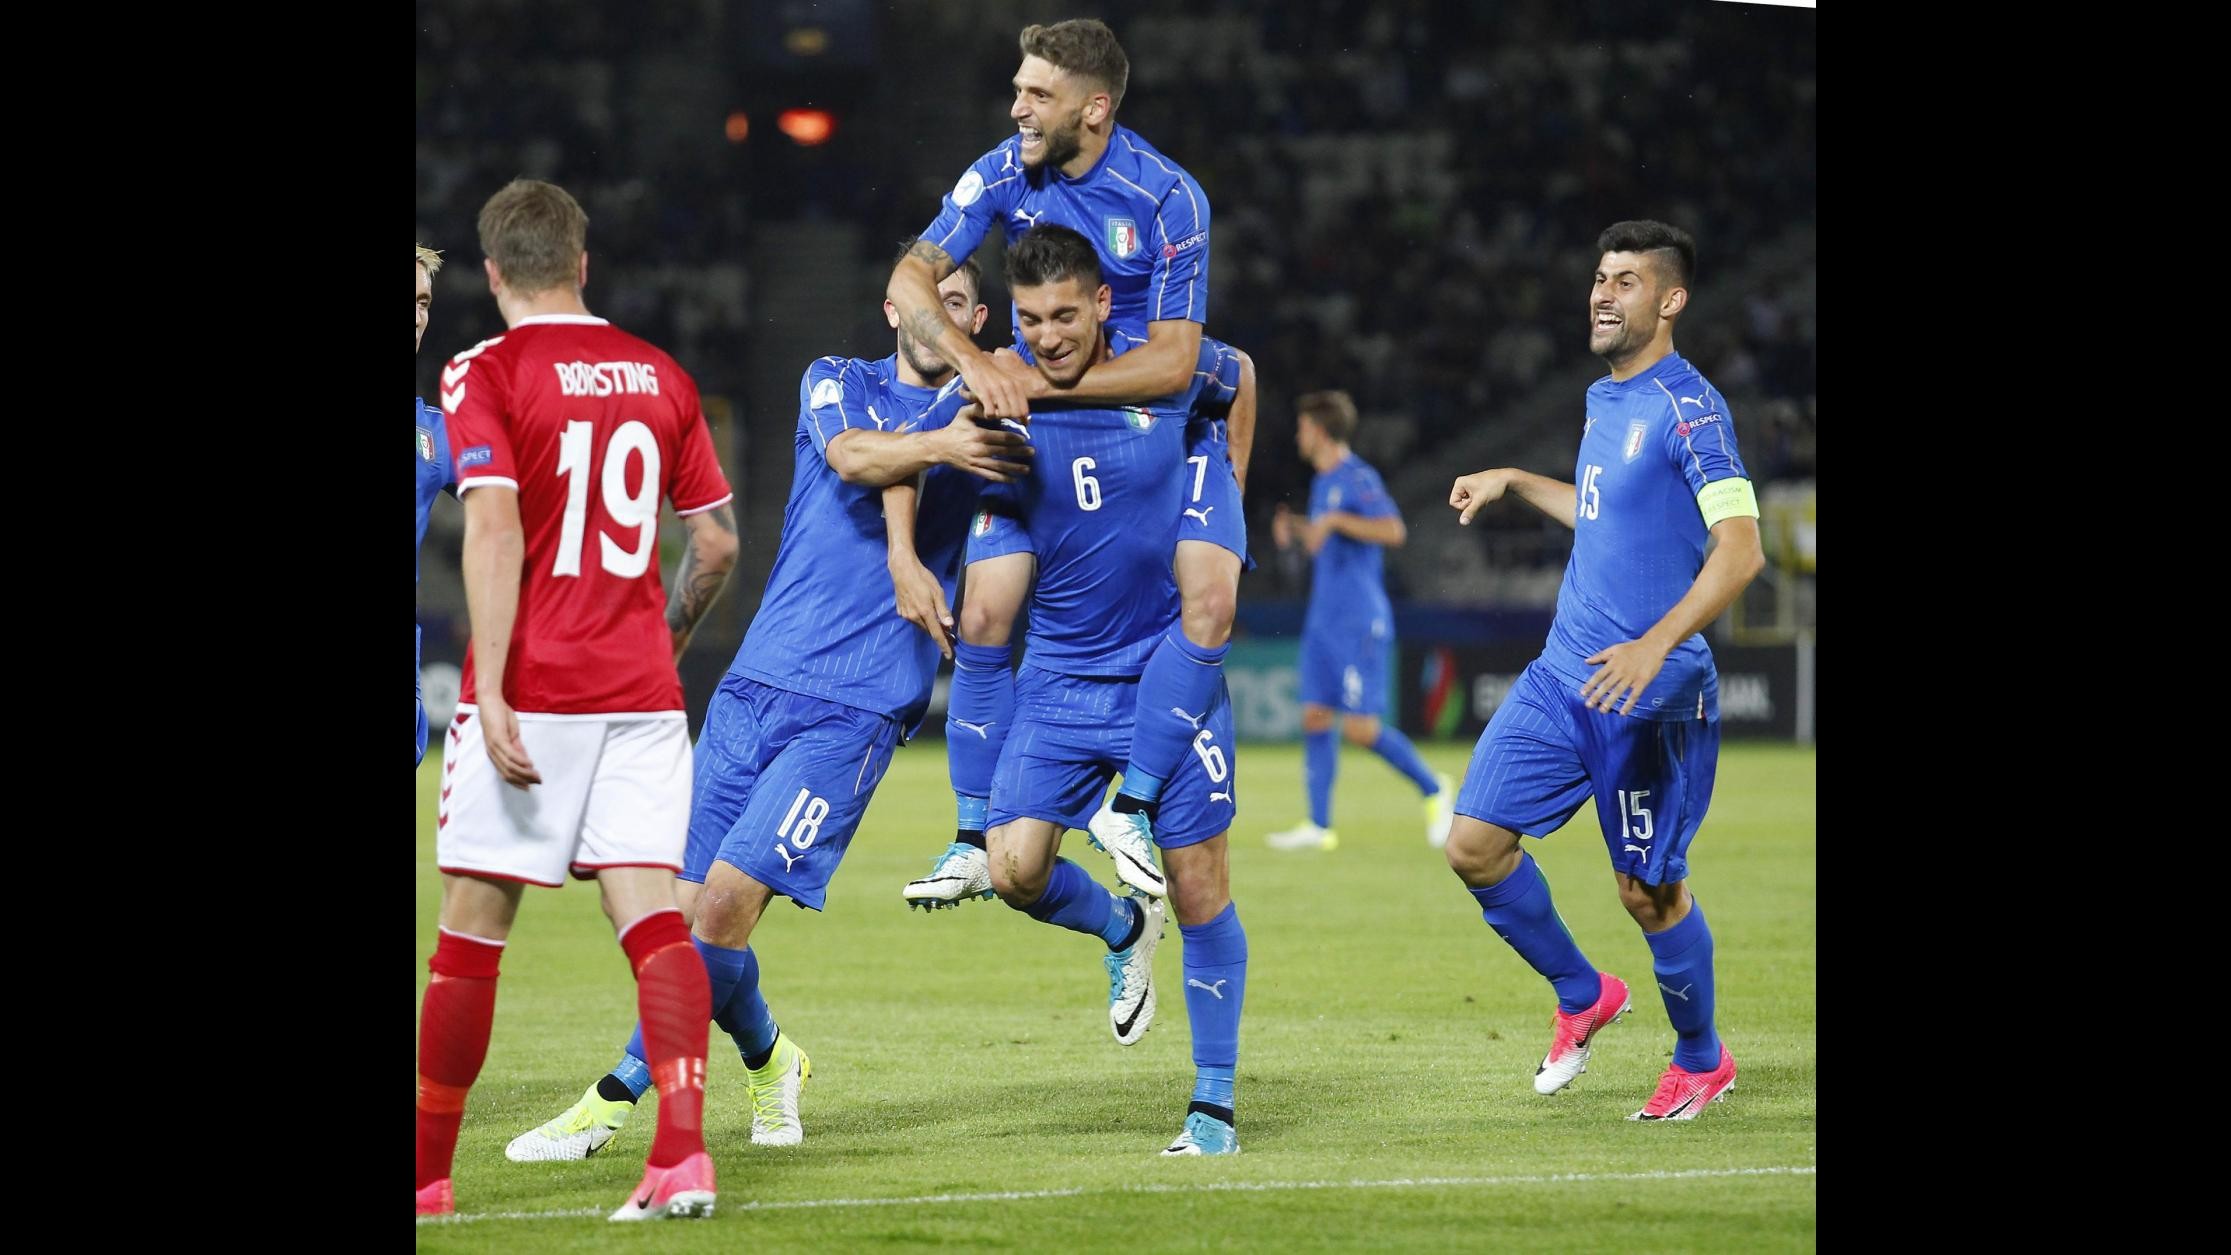 FOTO Europei U21, buon esordio per l’Italia: Danimarca ko 2-0